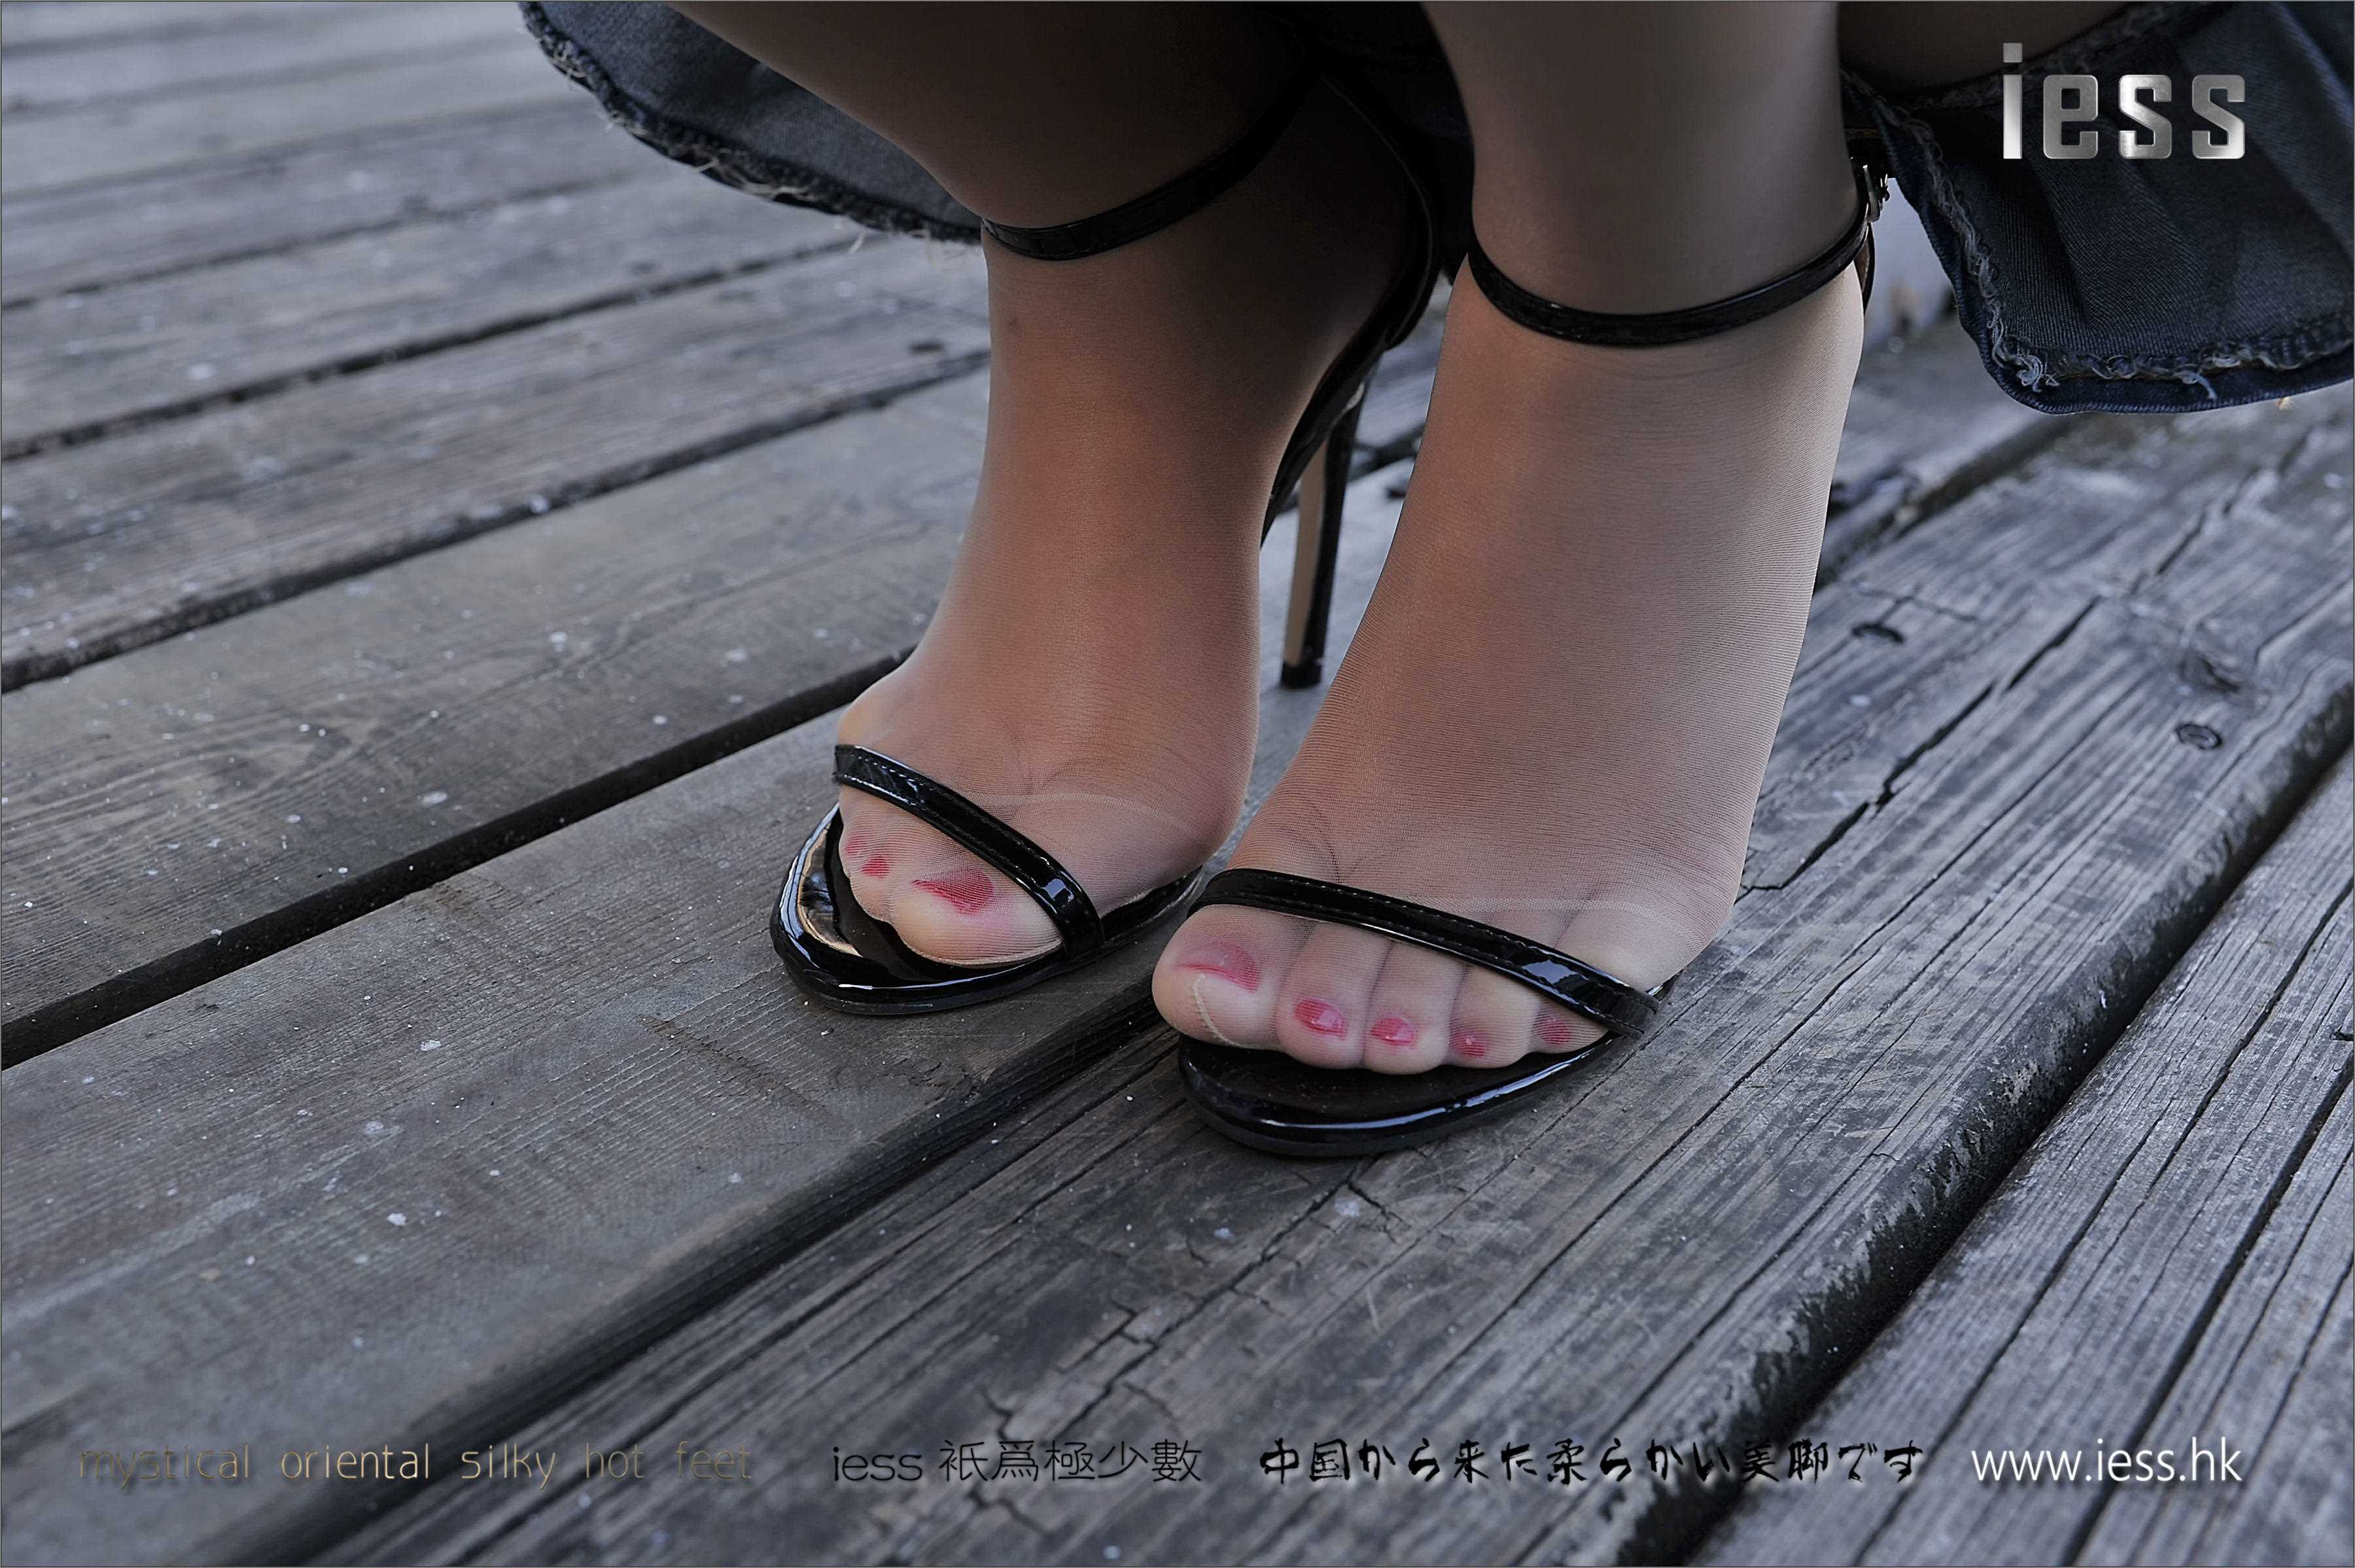 China Beauty Legs and feet 191